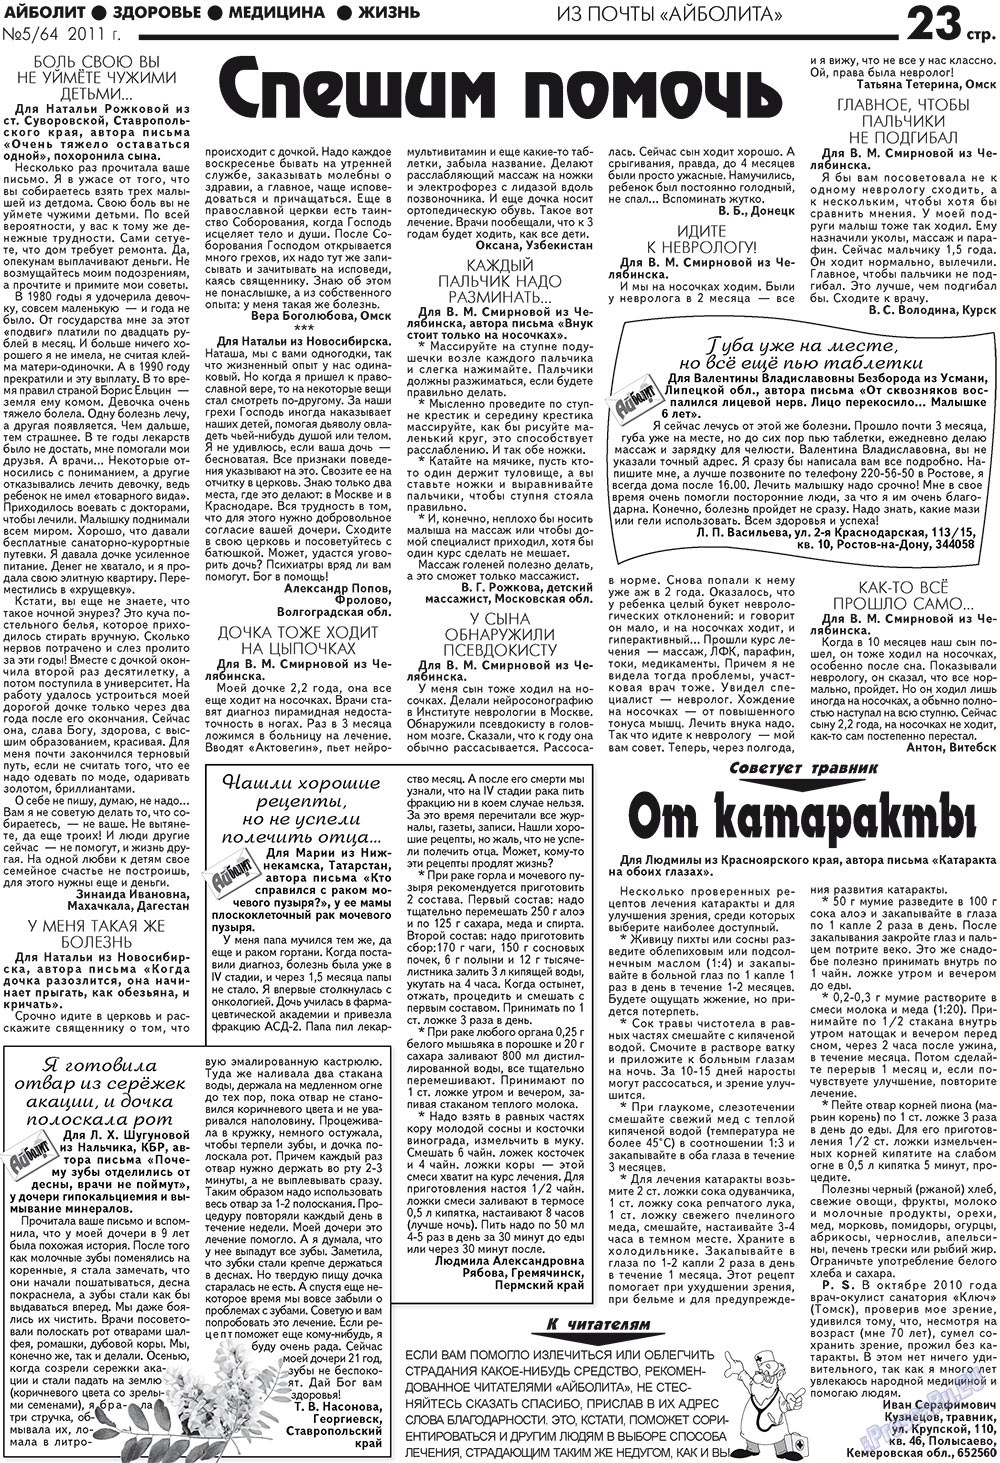 АйБолит (газета). 2011 год, номер 5, стр. 23